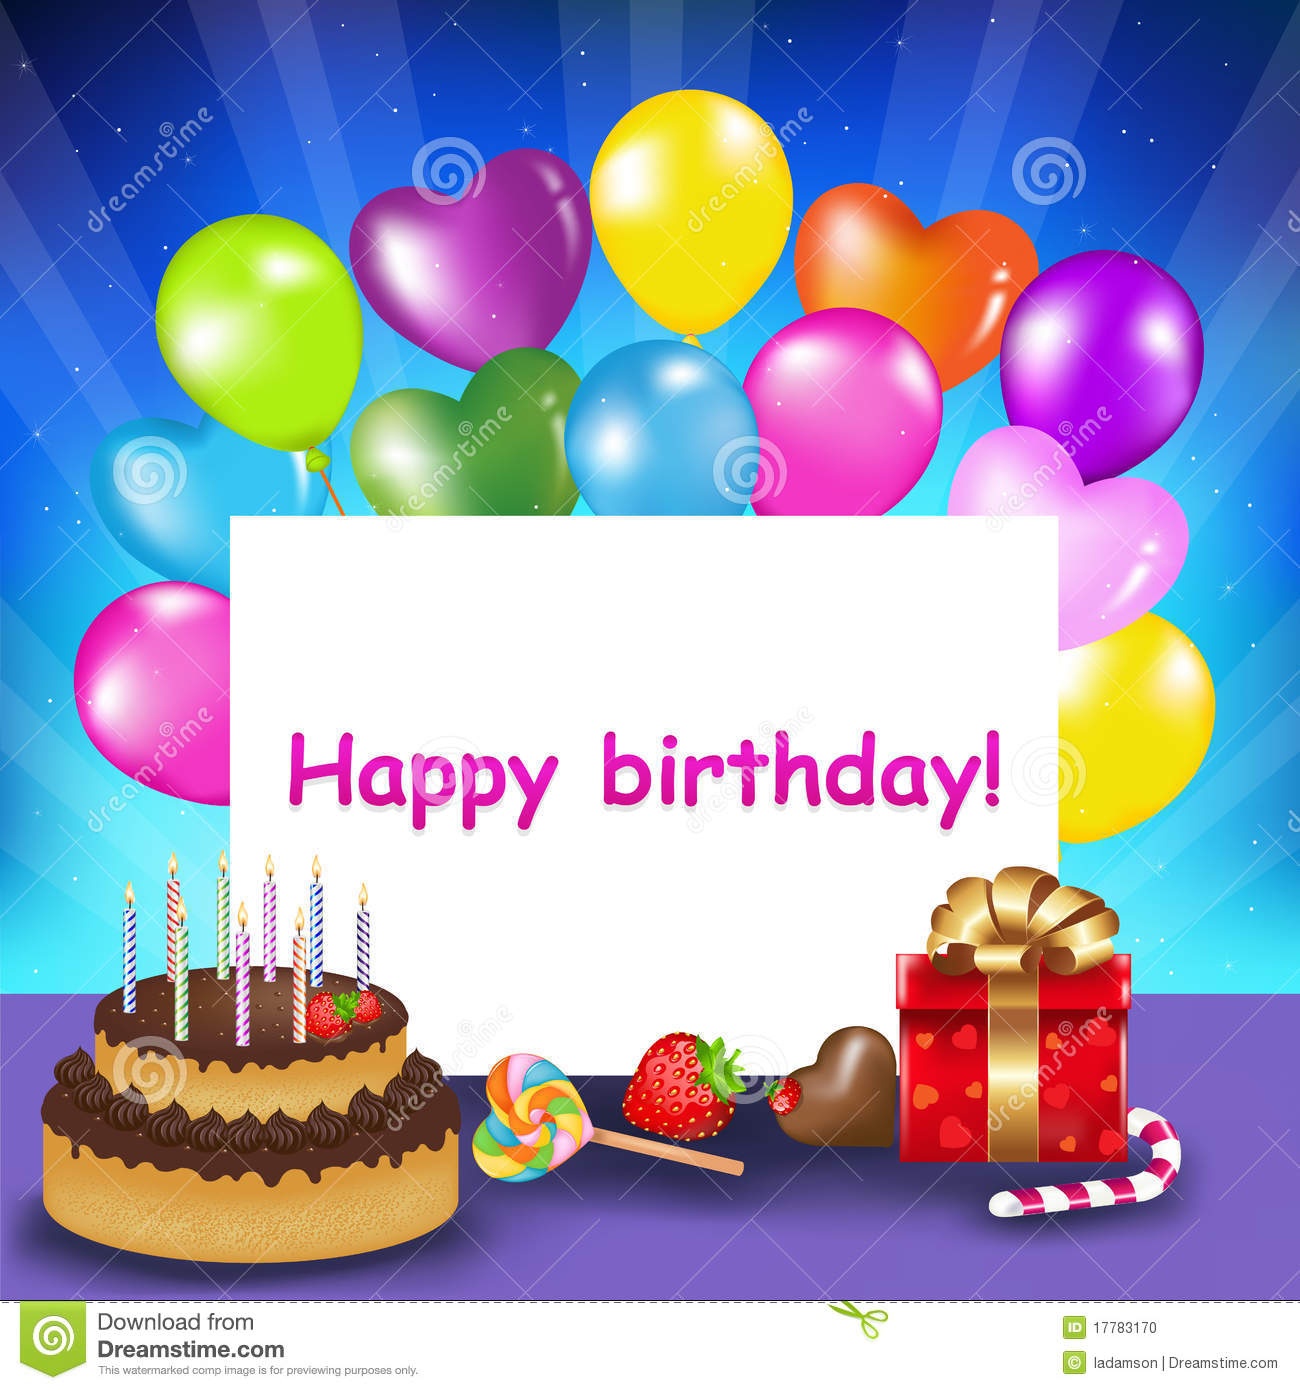 91+ Happy Birthday Custom Cards Free - Happy Birthday Gift Cards - Free Printable Happy Birthday Cards Online